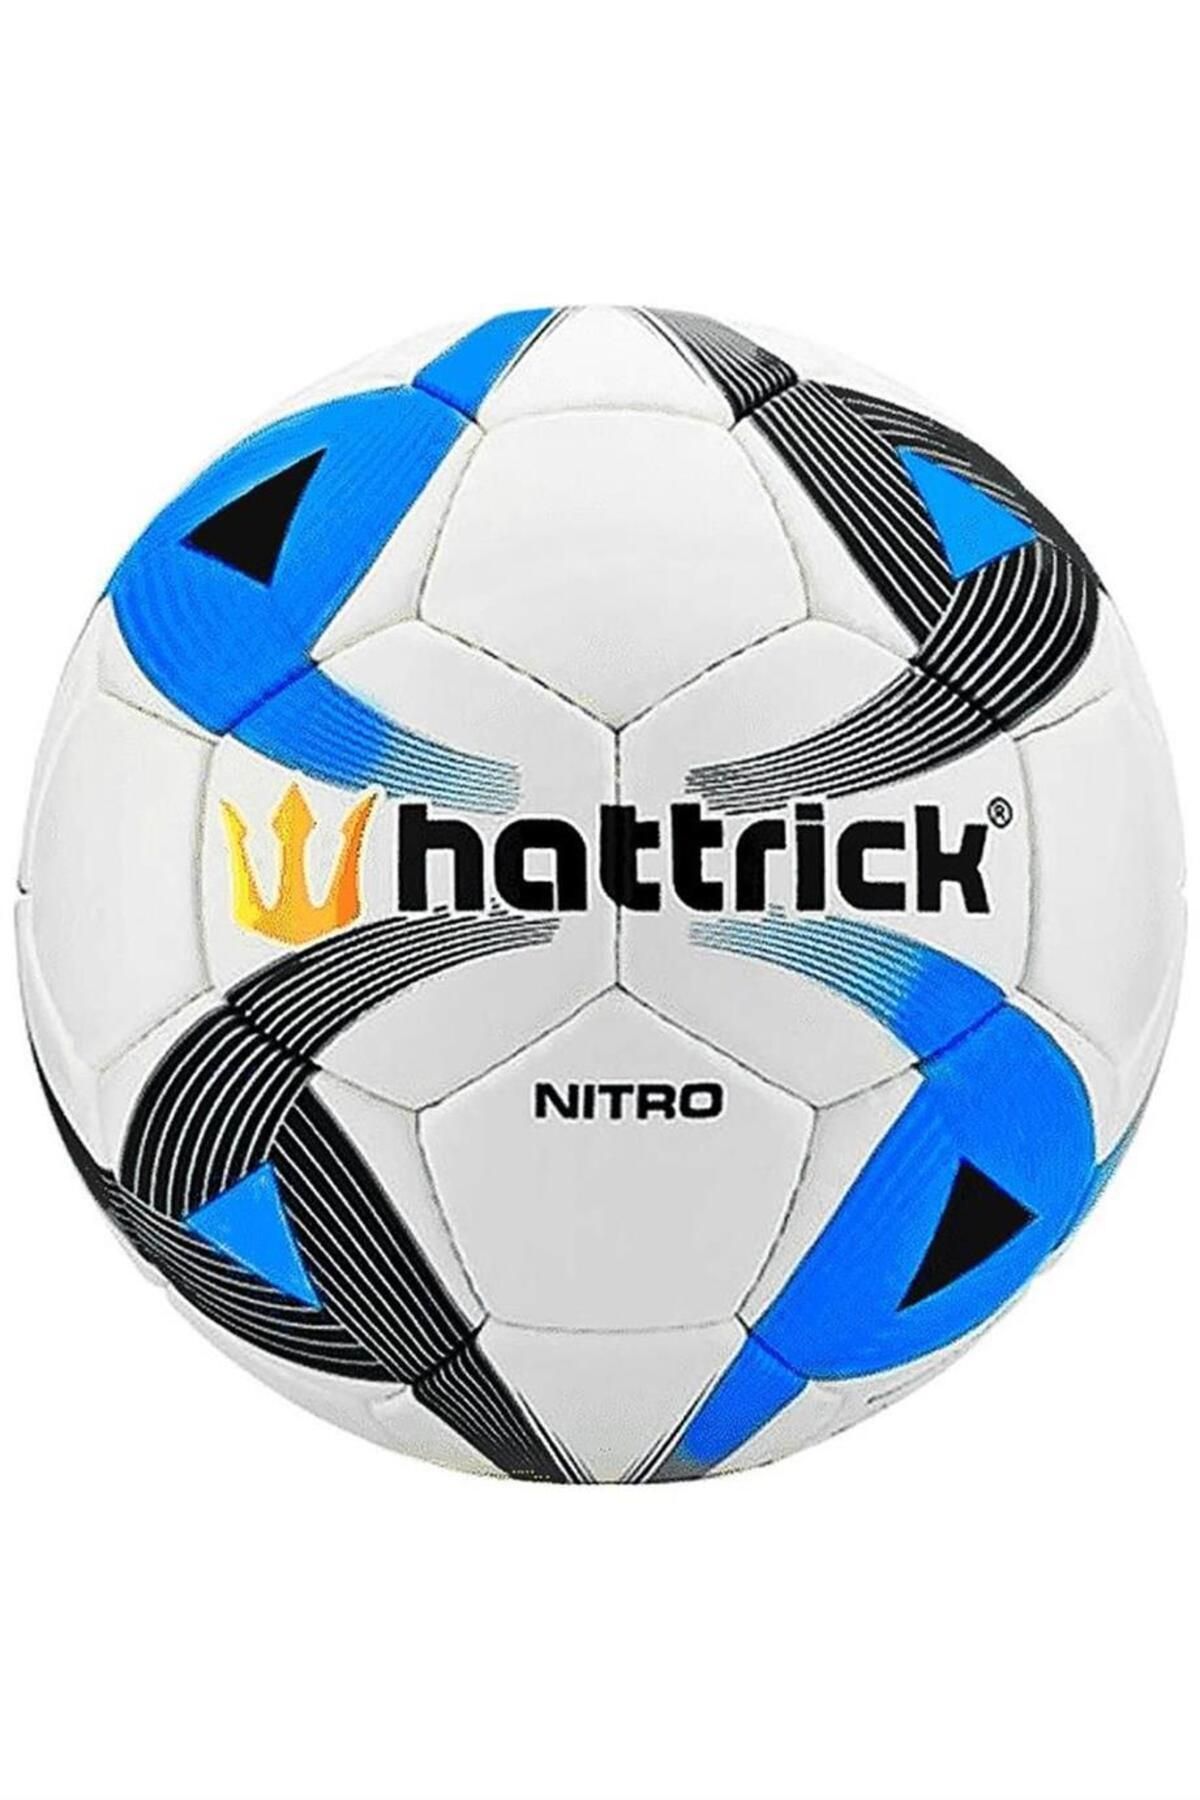 ercan oyuncak Hattrıck Nıtro Futbol Topu No 5